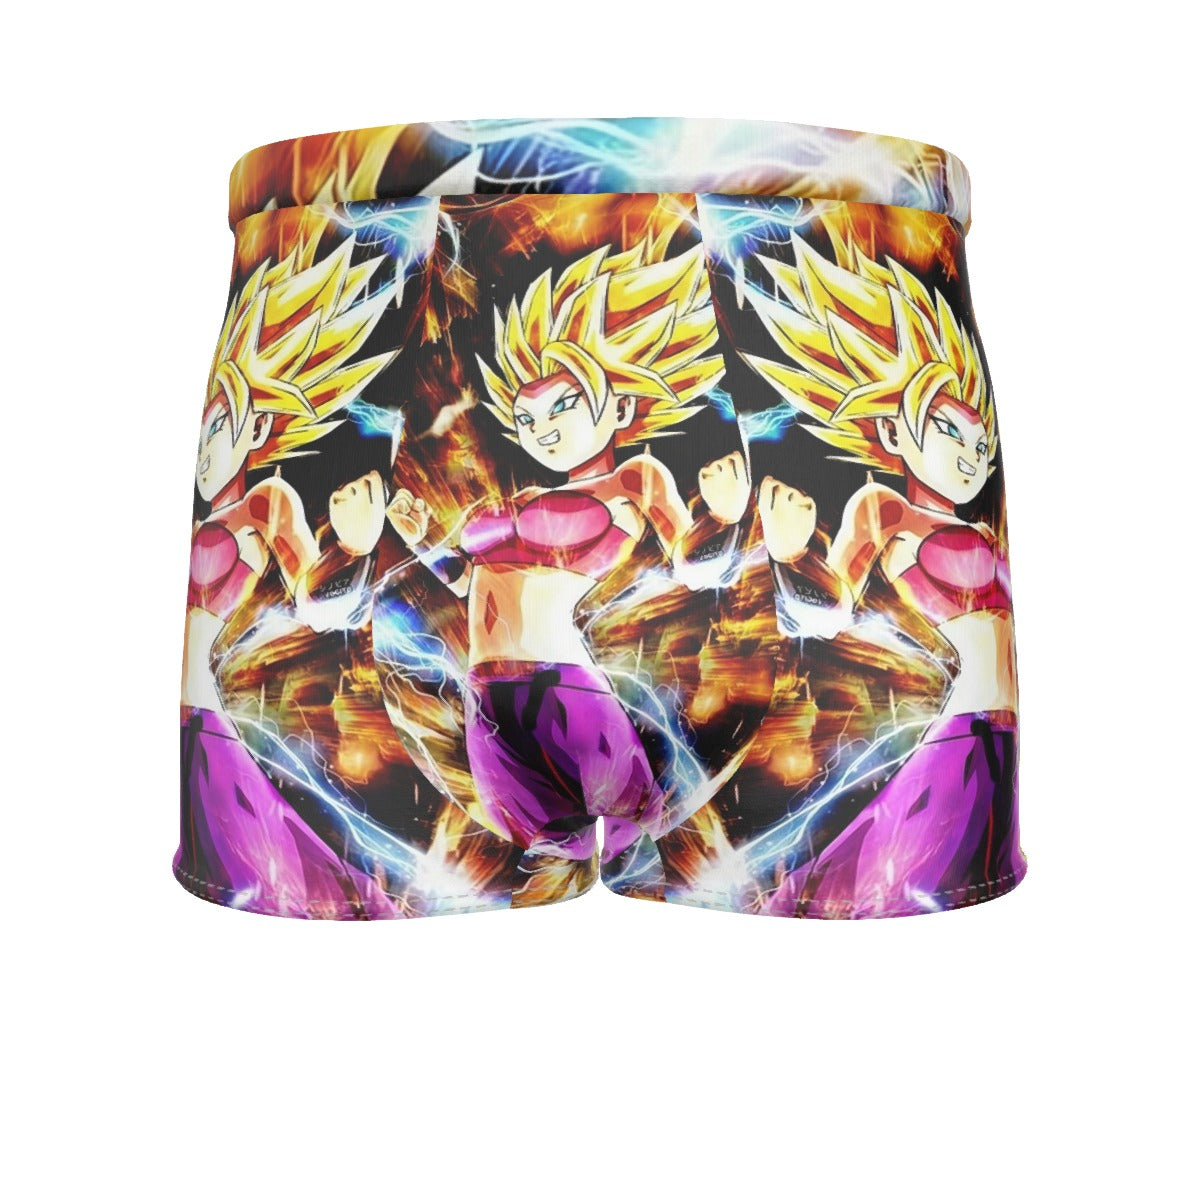 Dragon Ball Z Goku Charging SSJ2 Cool Men's Underwear